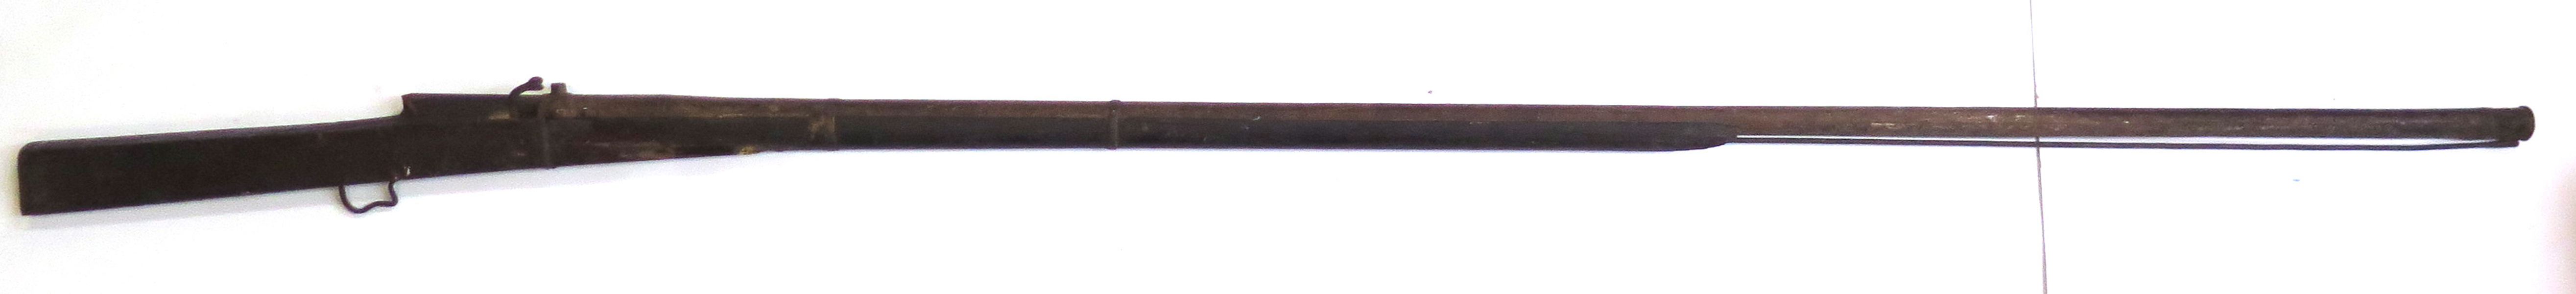 Toradar, smide med trästock, Indien, 18-1900-tal, luntlåsmekanism, _12305a_lg.jpeg